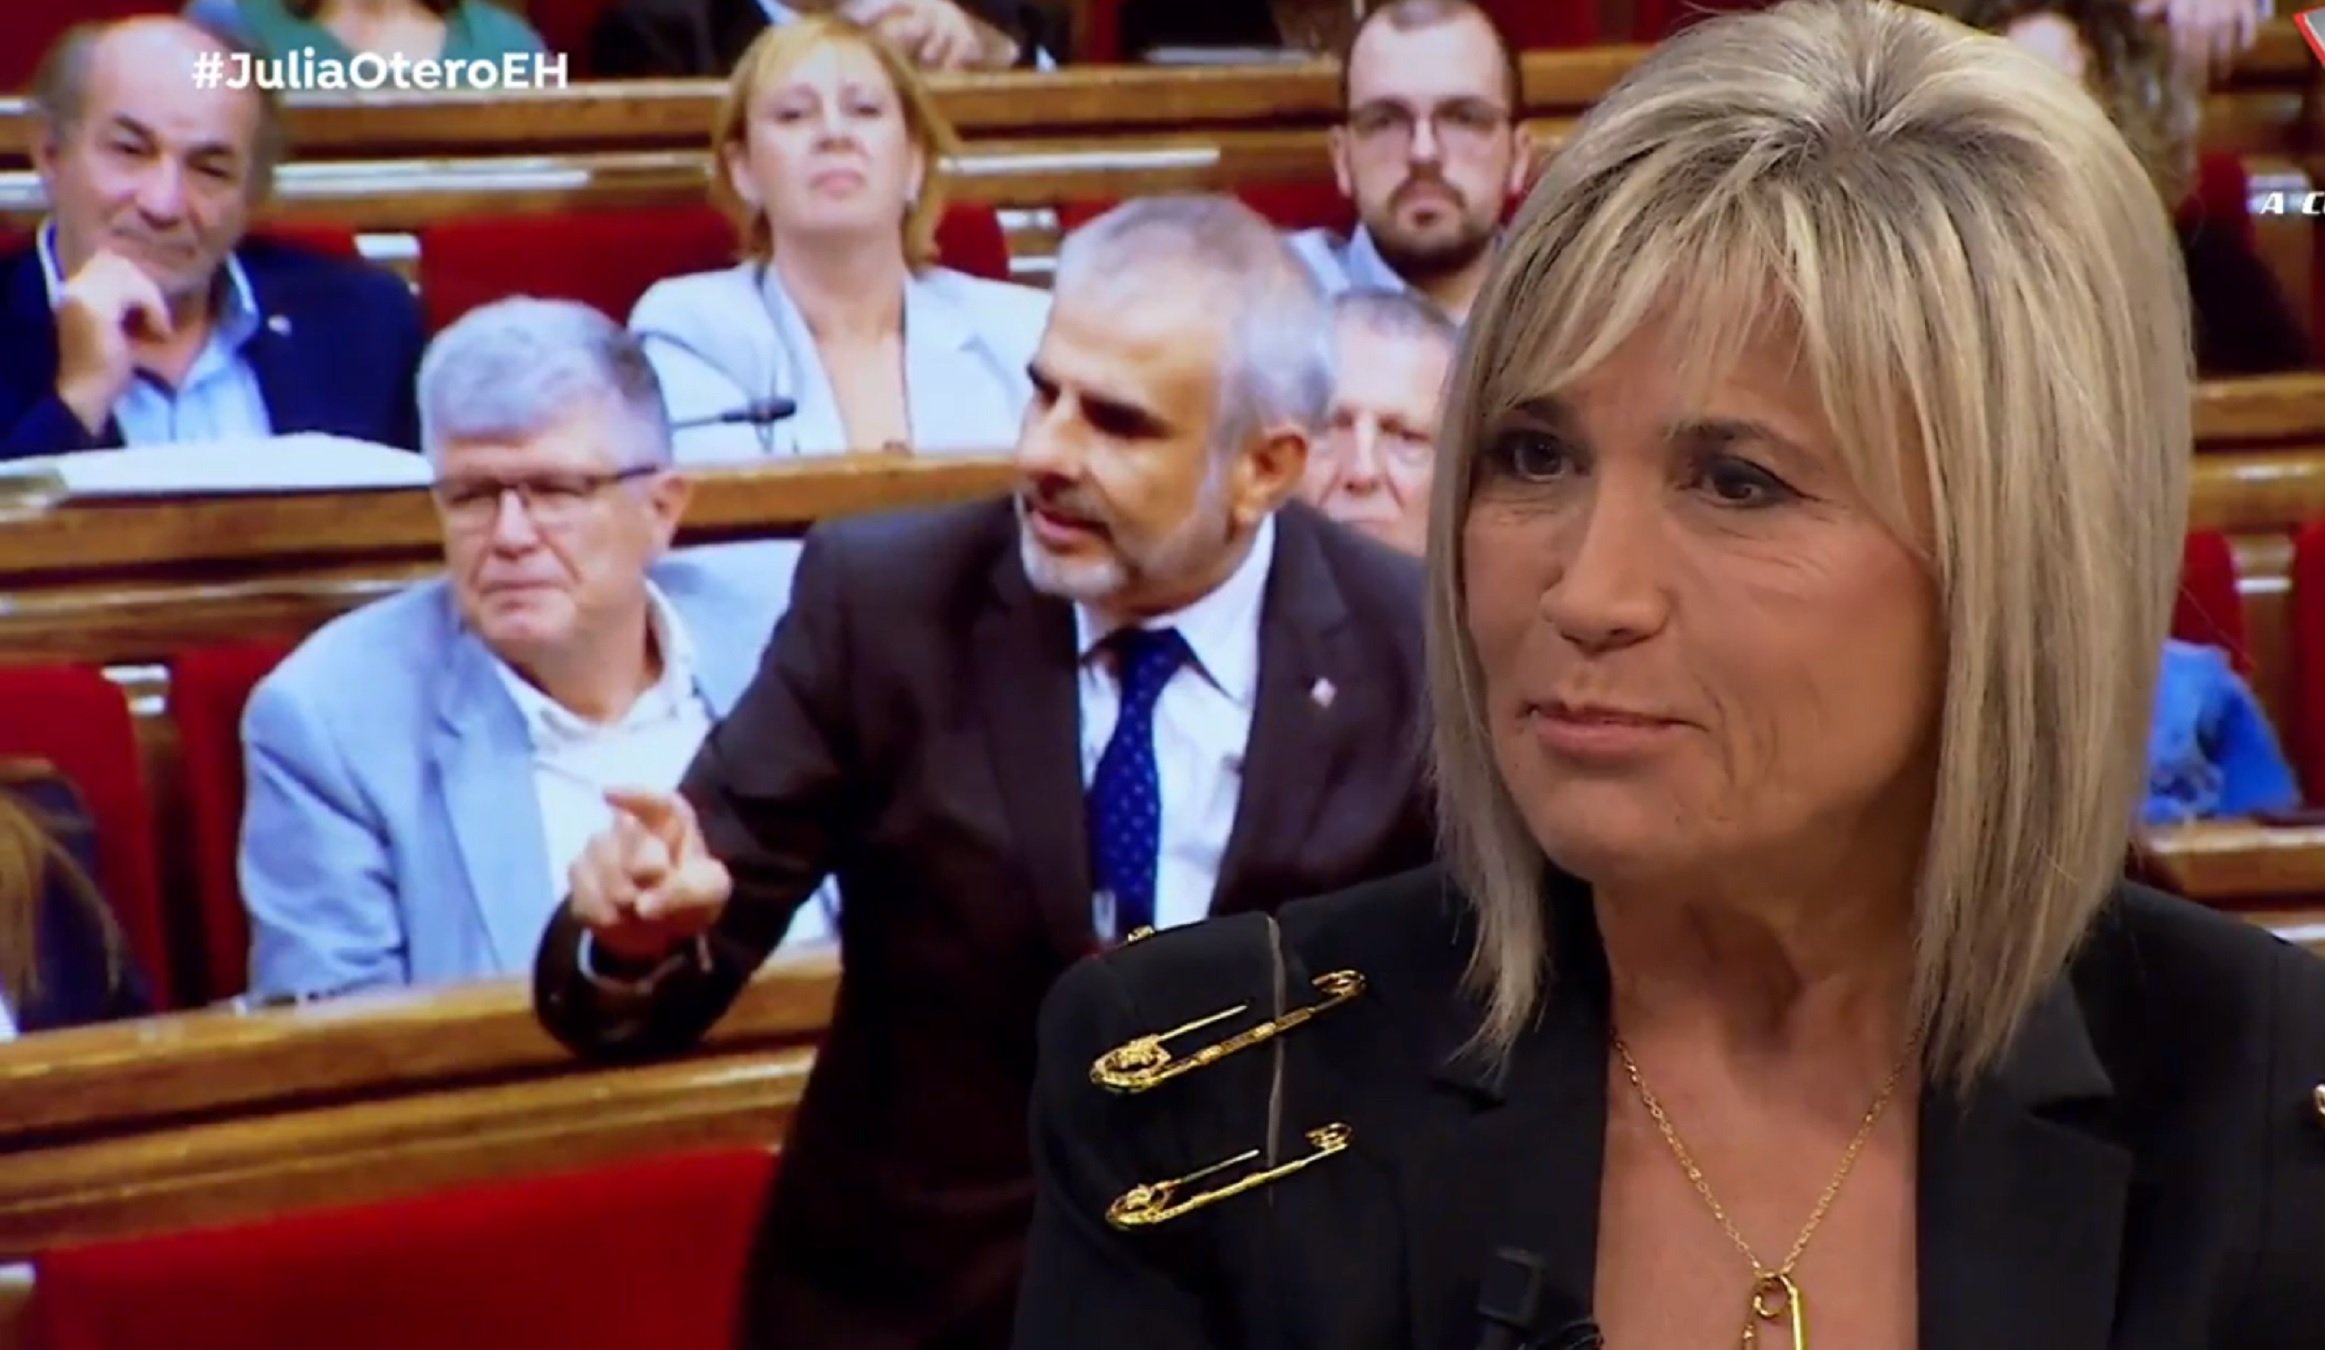 La red insulta a Julia Otero por defender a Catalunya: "pija vieja giliprogre"